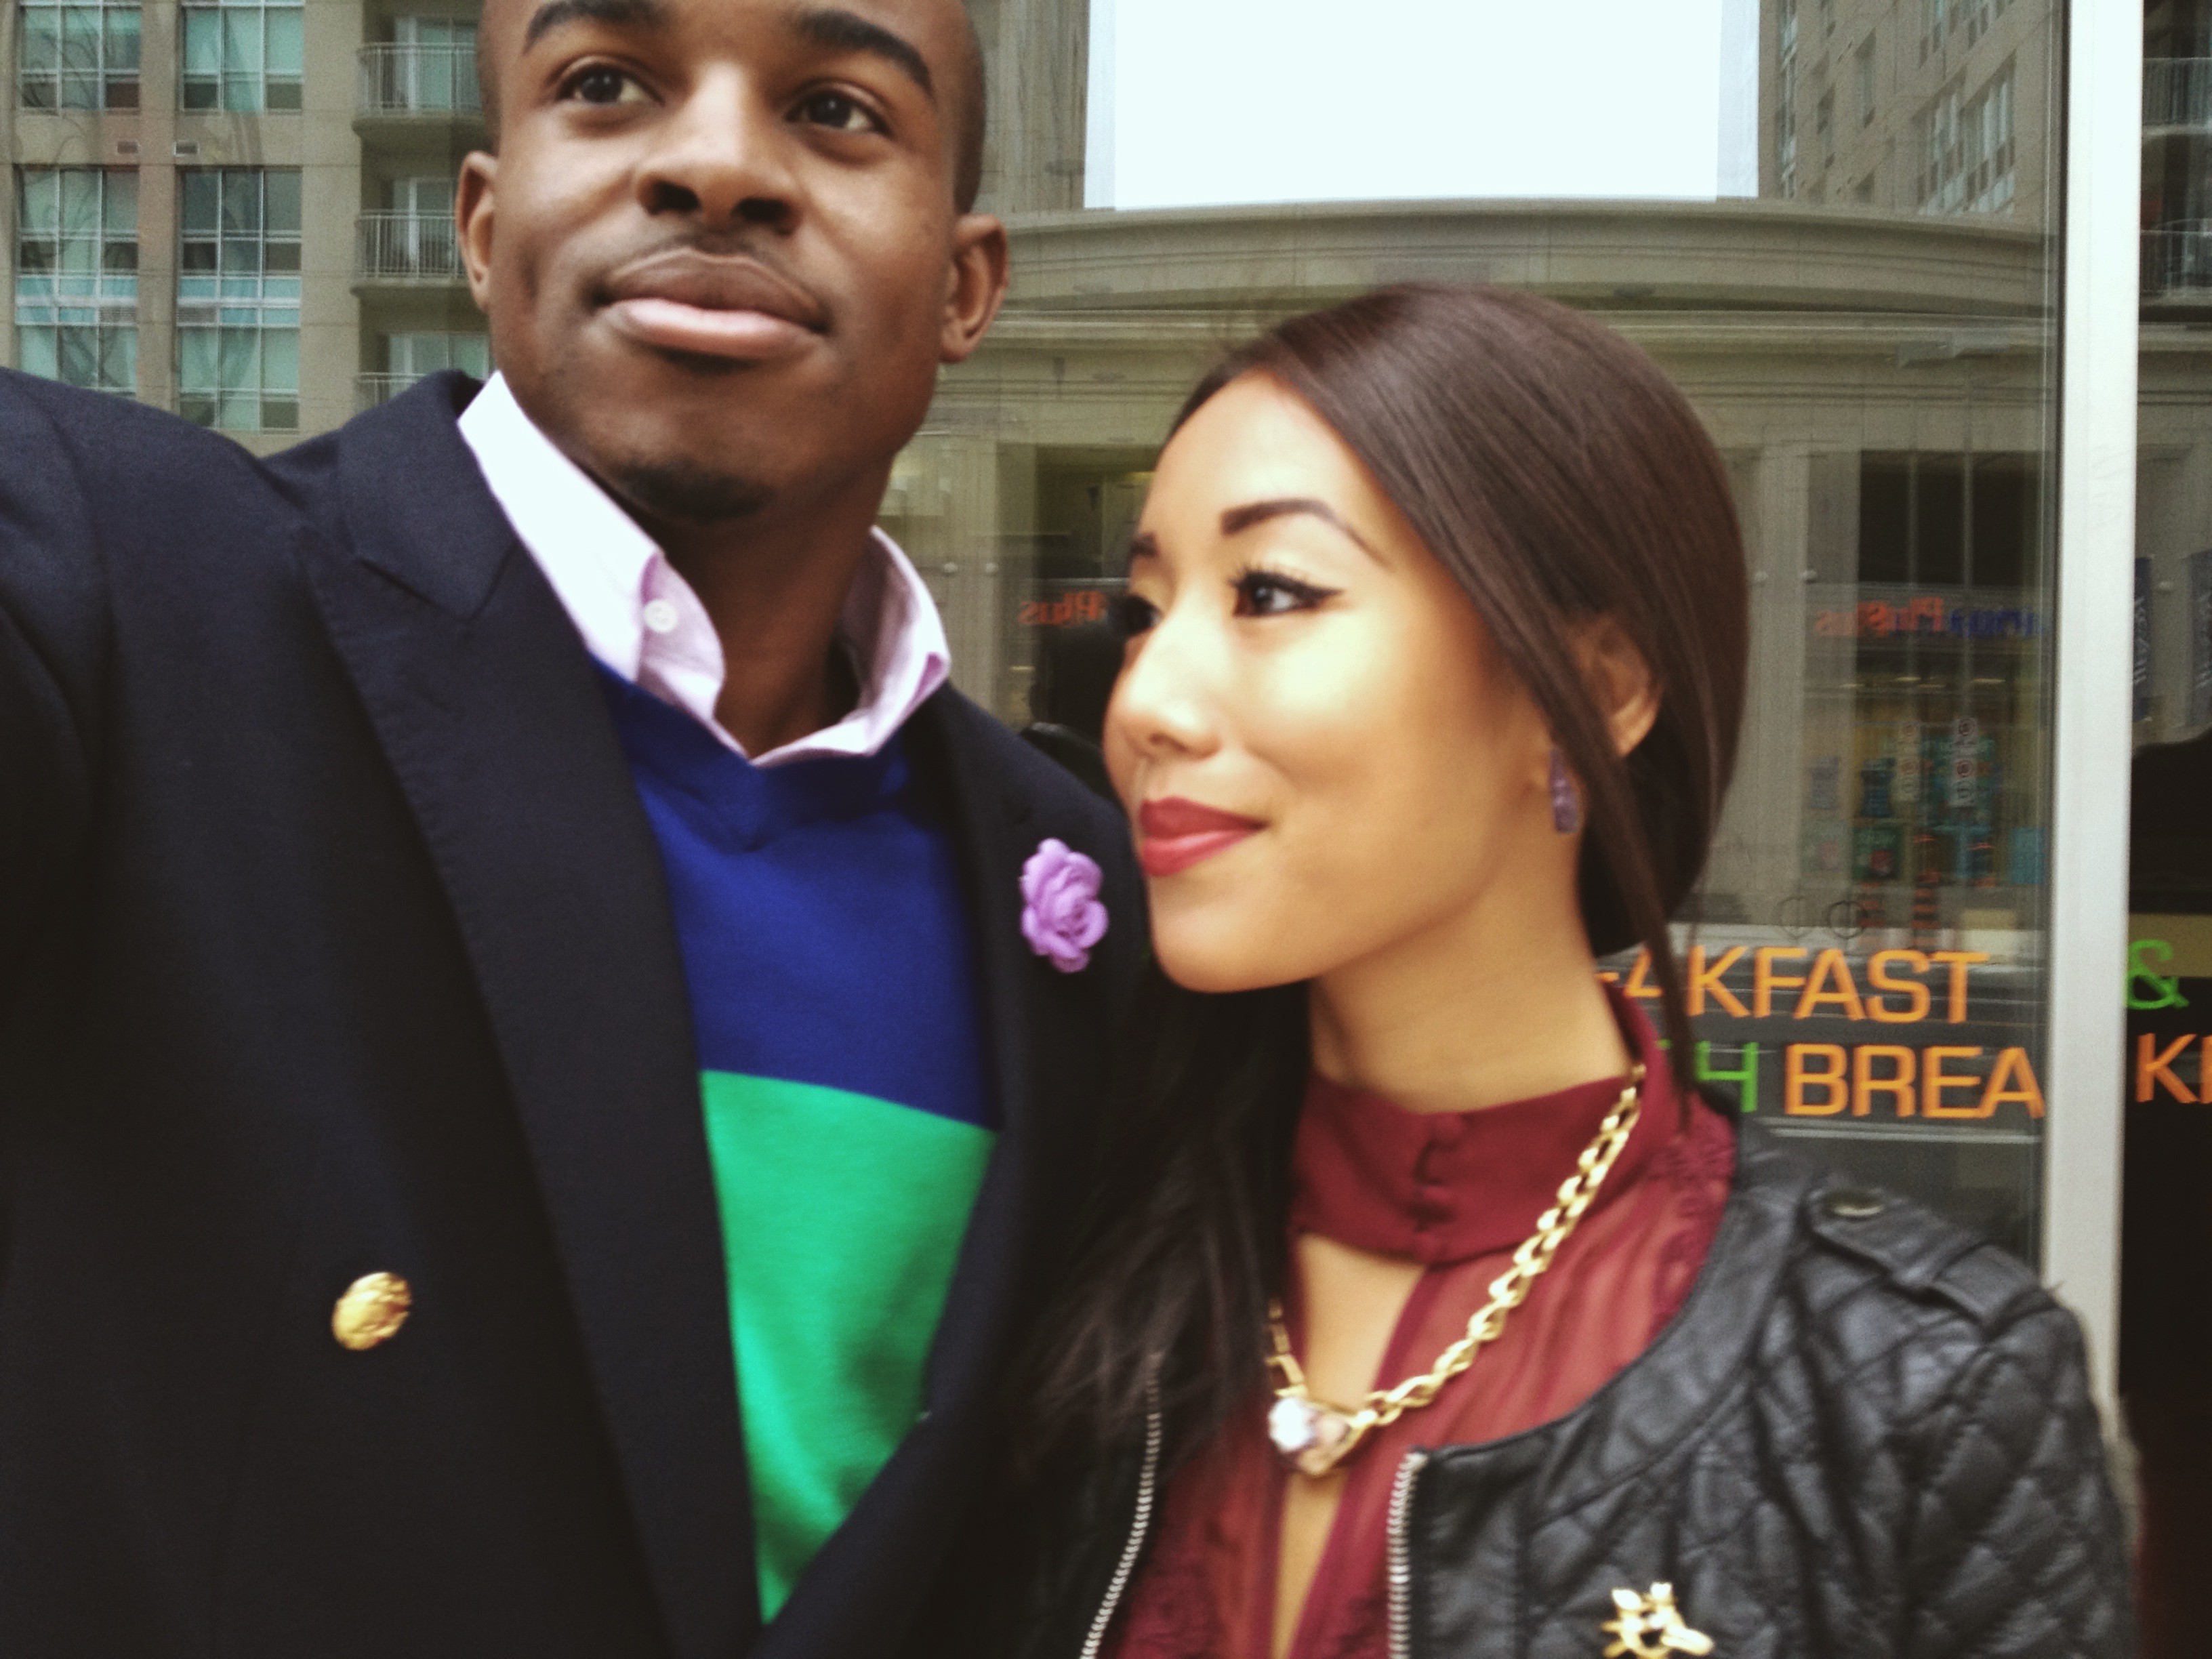 https://ourmode.ca/wp-content/uploads/2013/10/black-asian-fashion-couple-e1381108874396.jpg